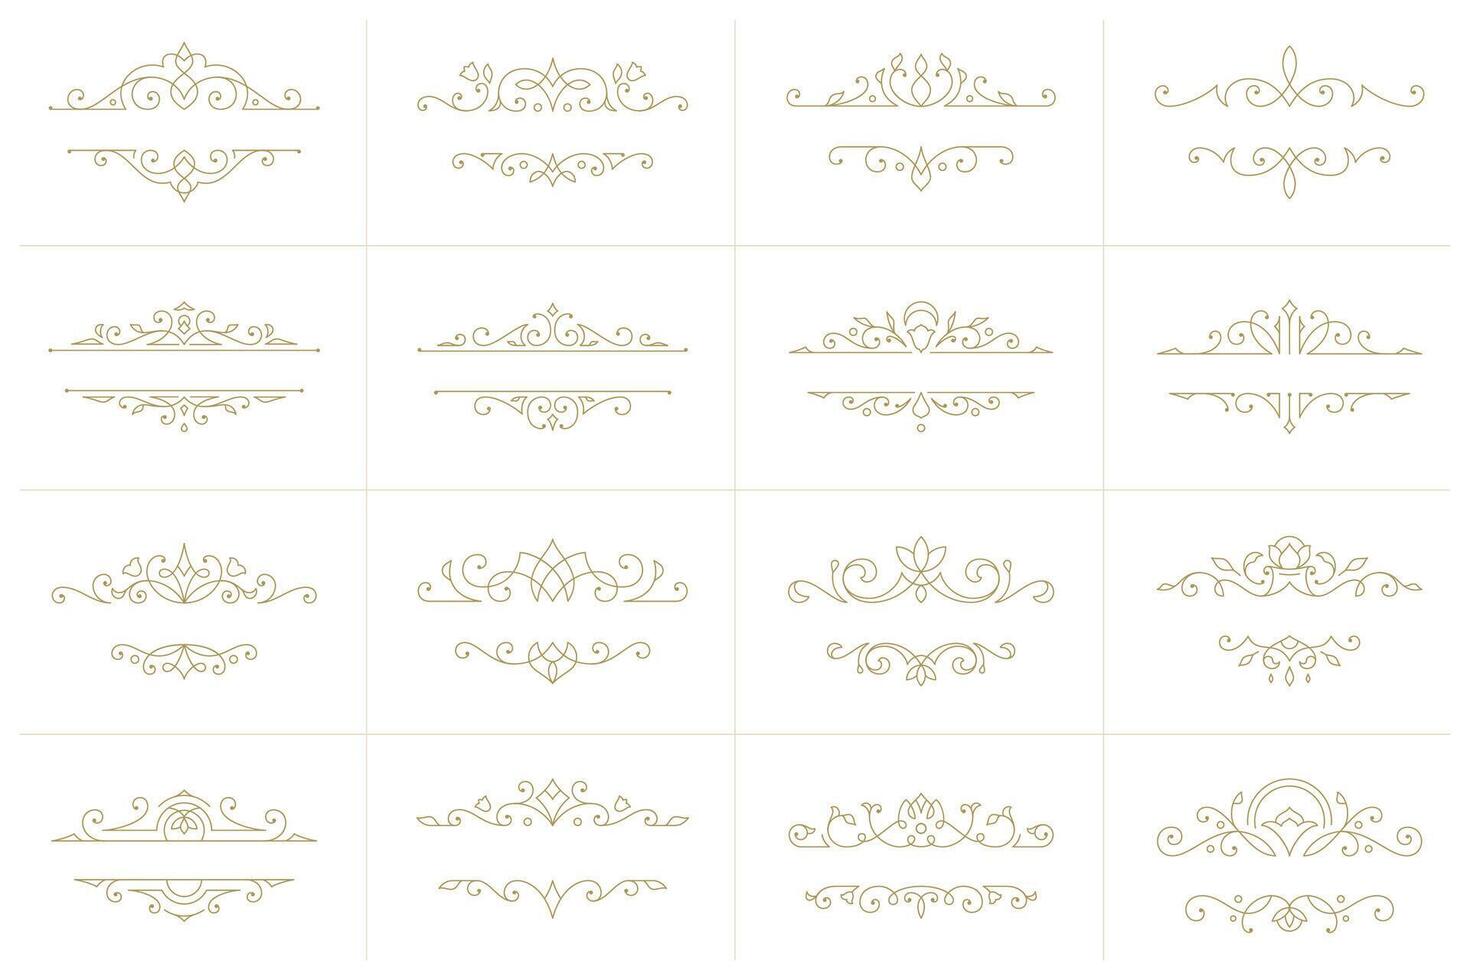 Clásico ornamento remolino texto divisores filigrana caligráfico vector colocar.